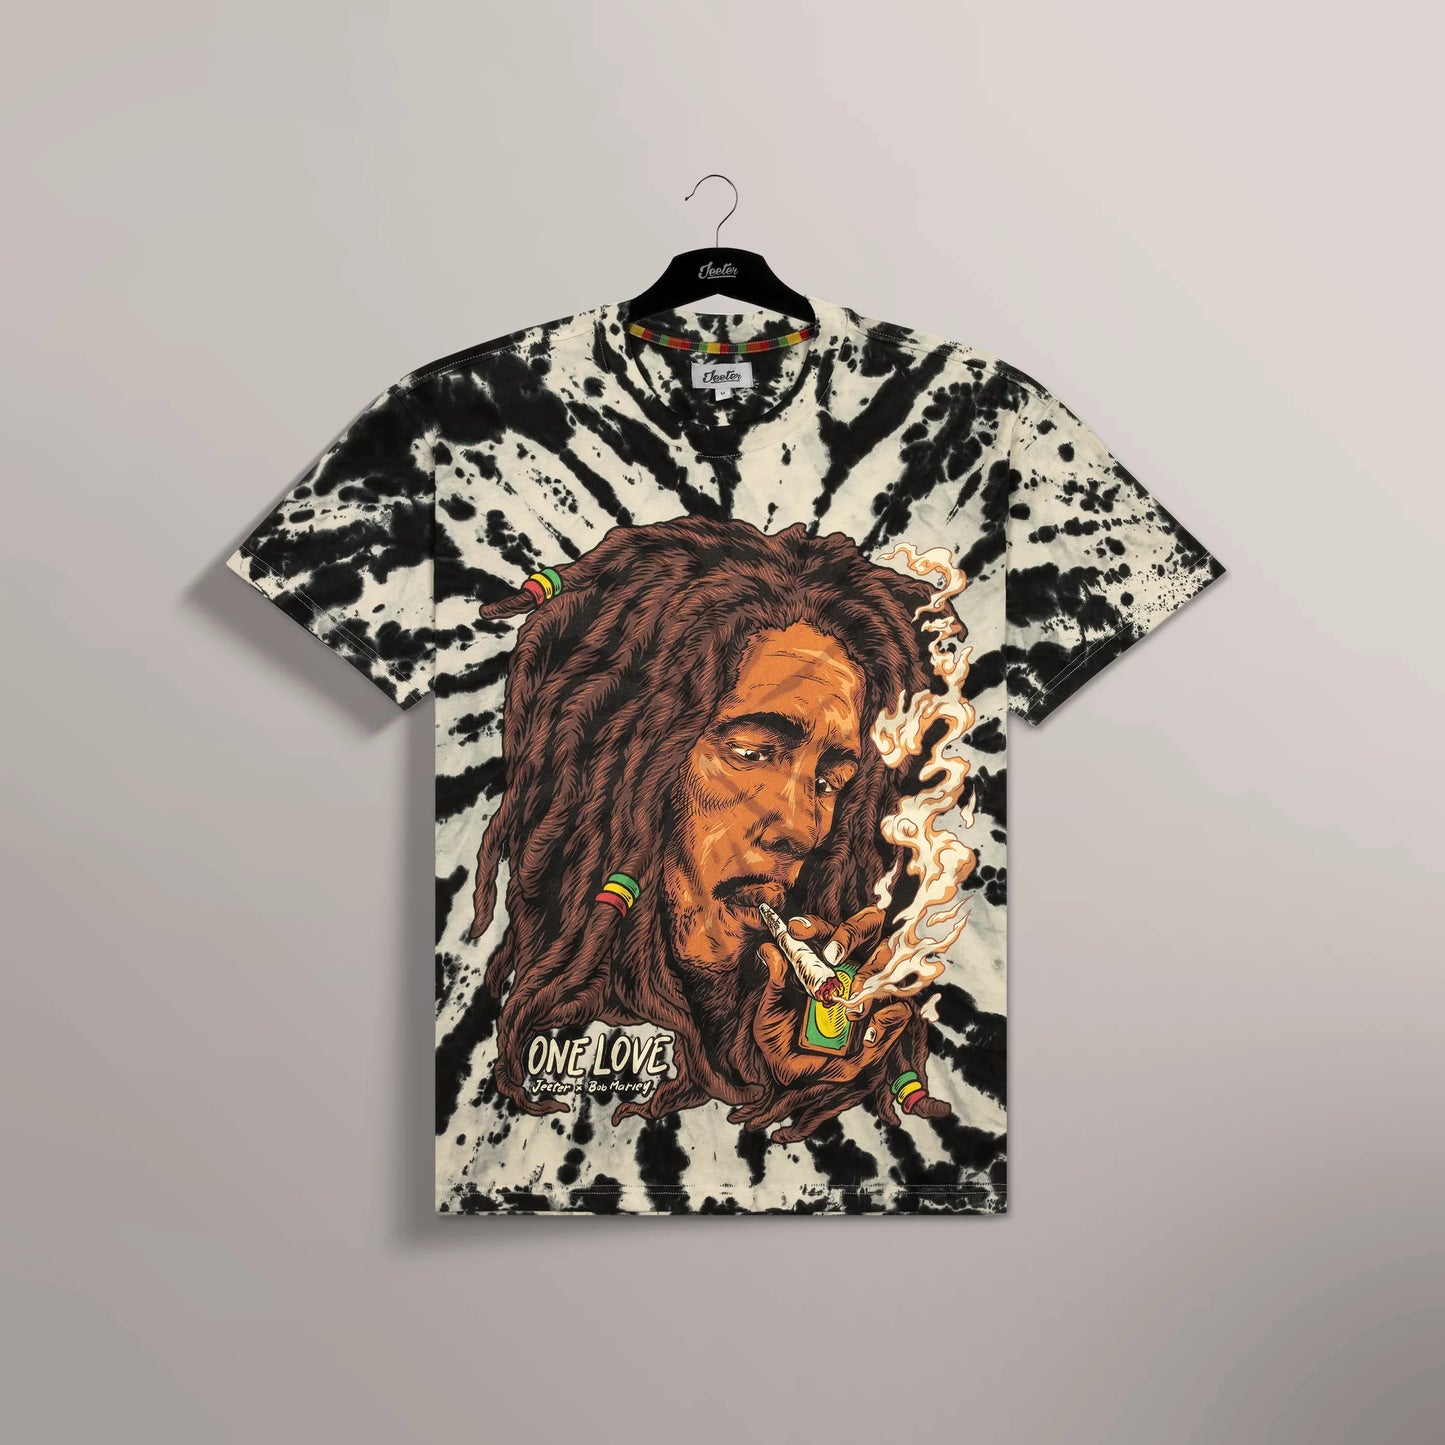 Jeeter x Bob Marley Tie Dye Graphic Tee